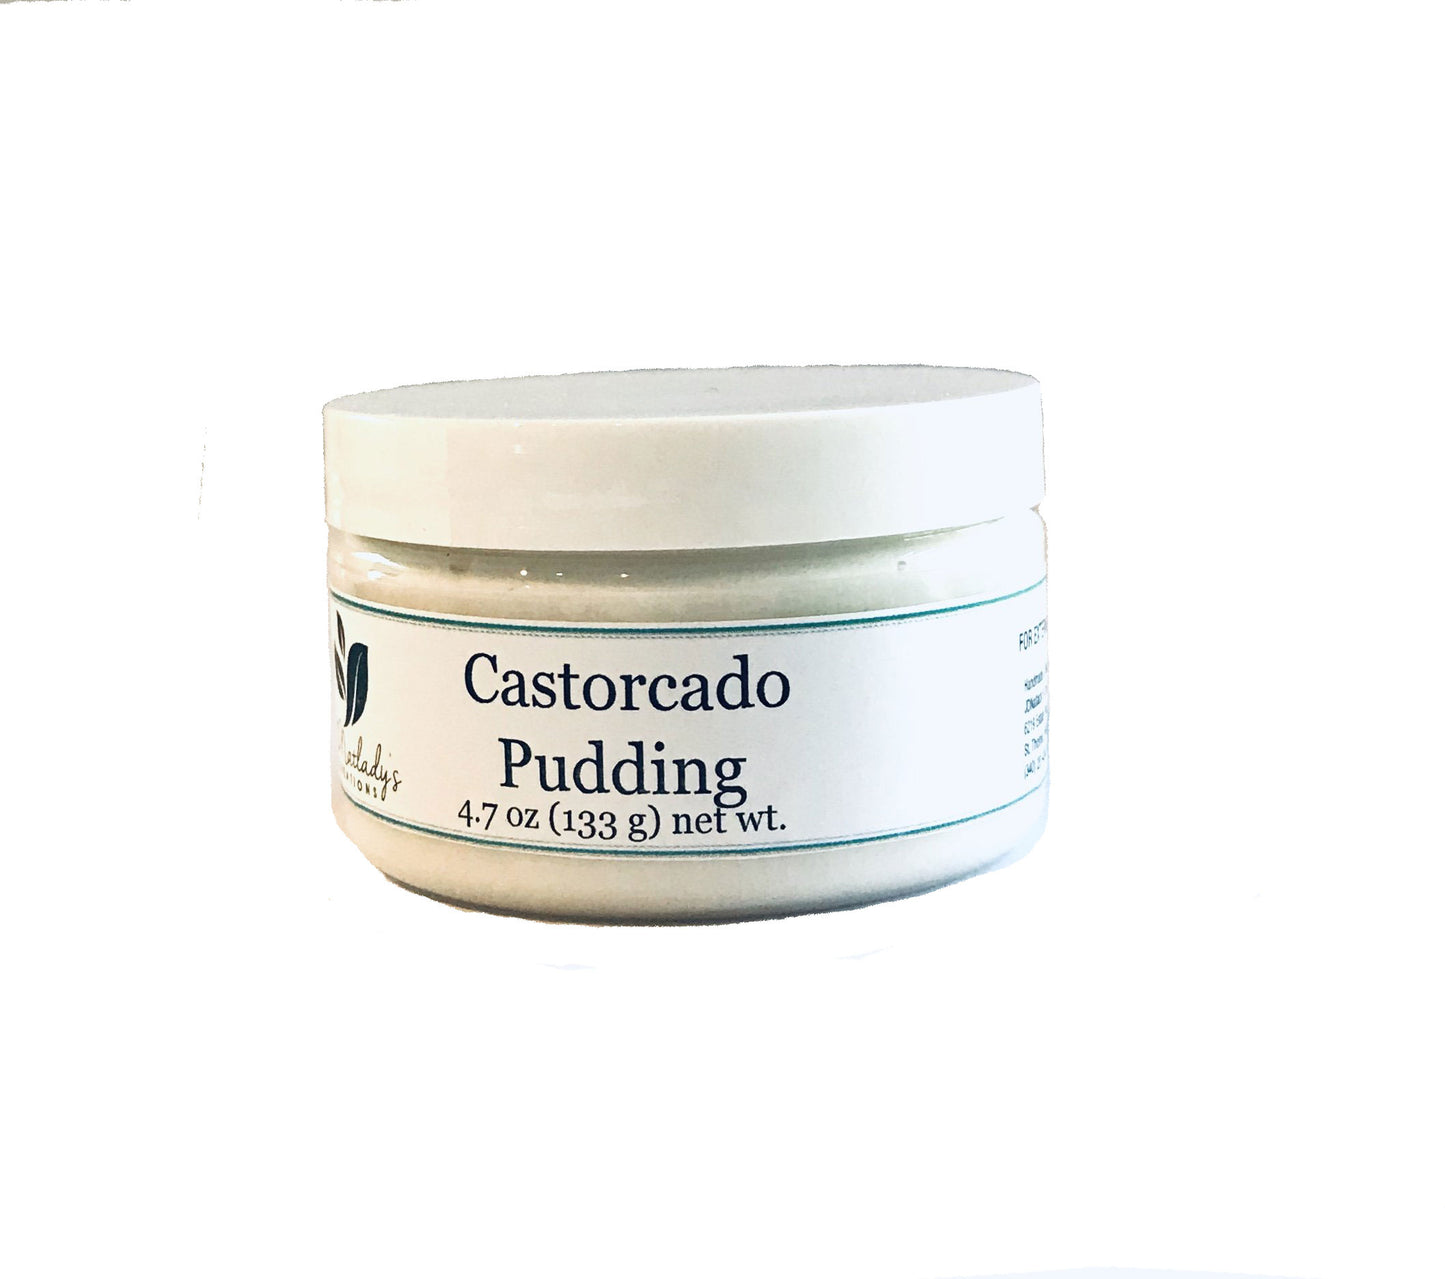 Castorcado Pudding body & hair moisturizer by JDNatlady's Creations